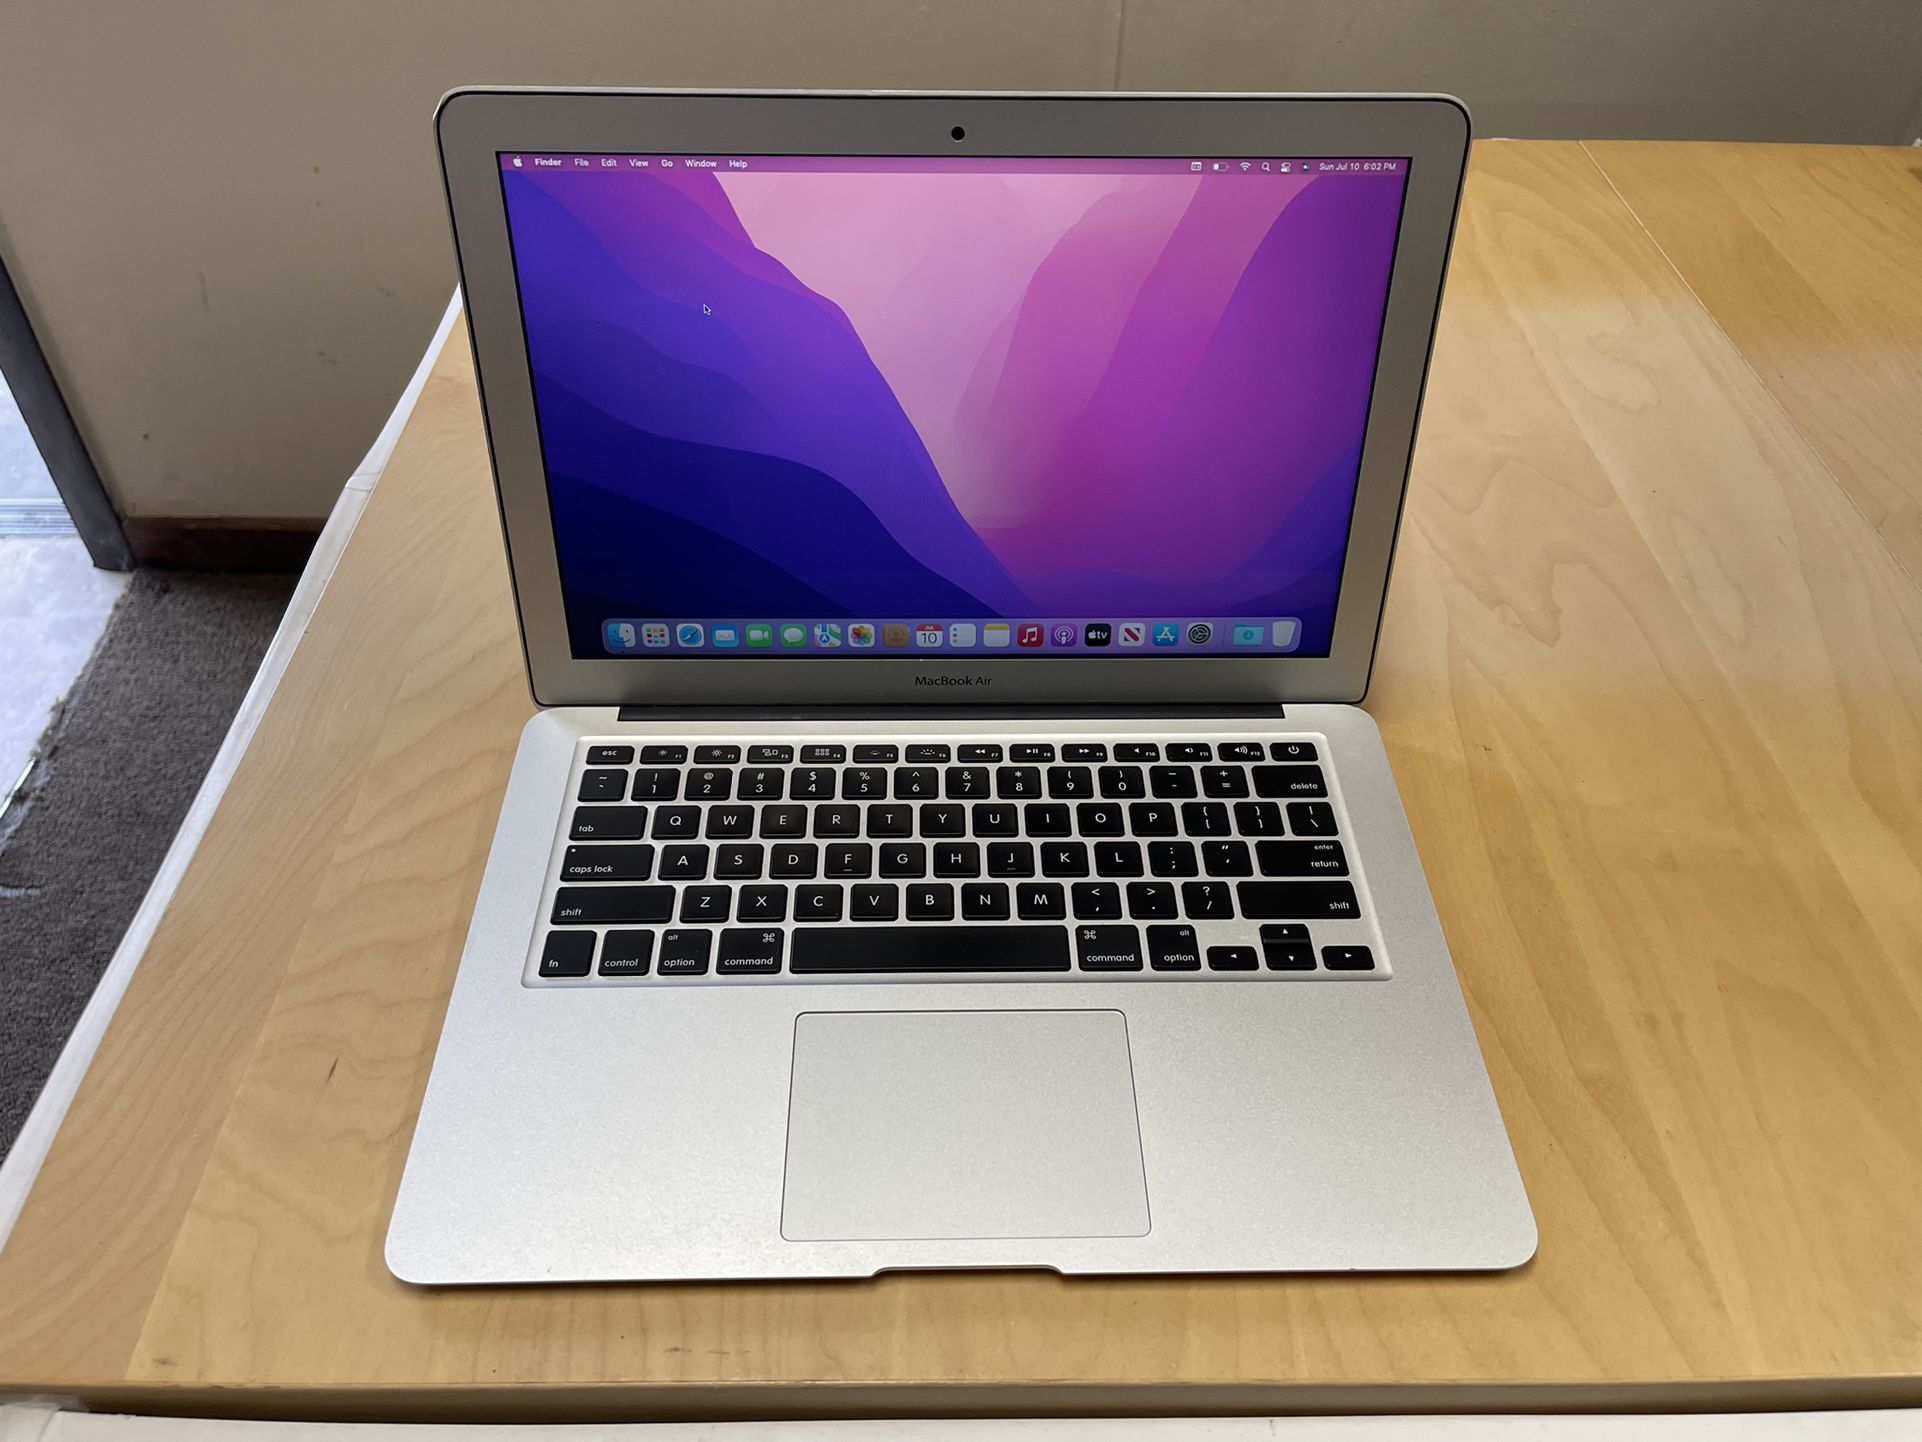 MacBook air 13 inch macos monterey (newest version)